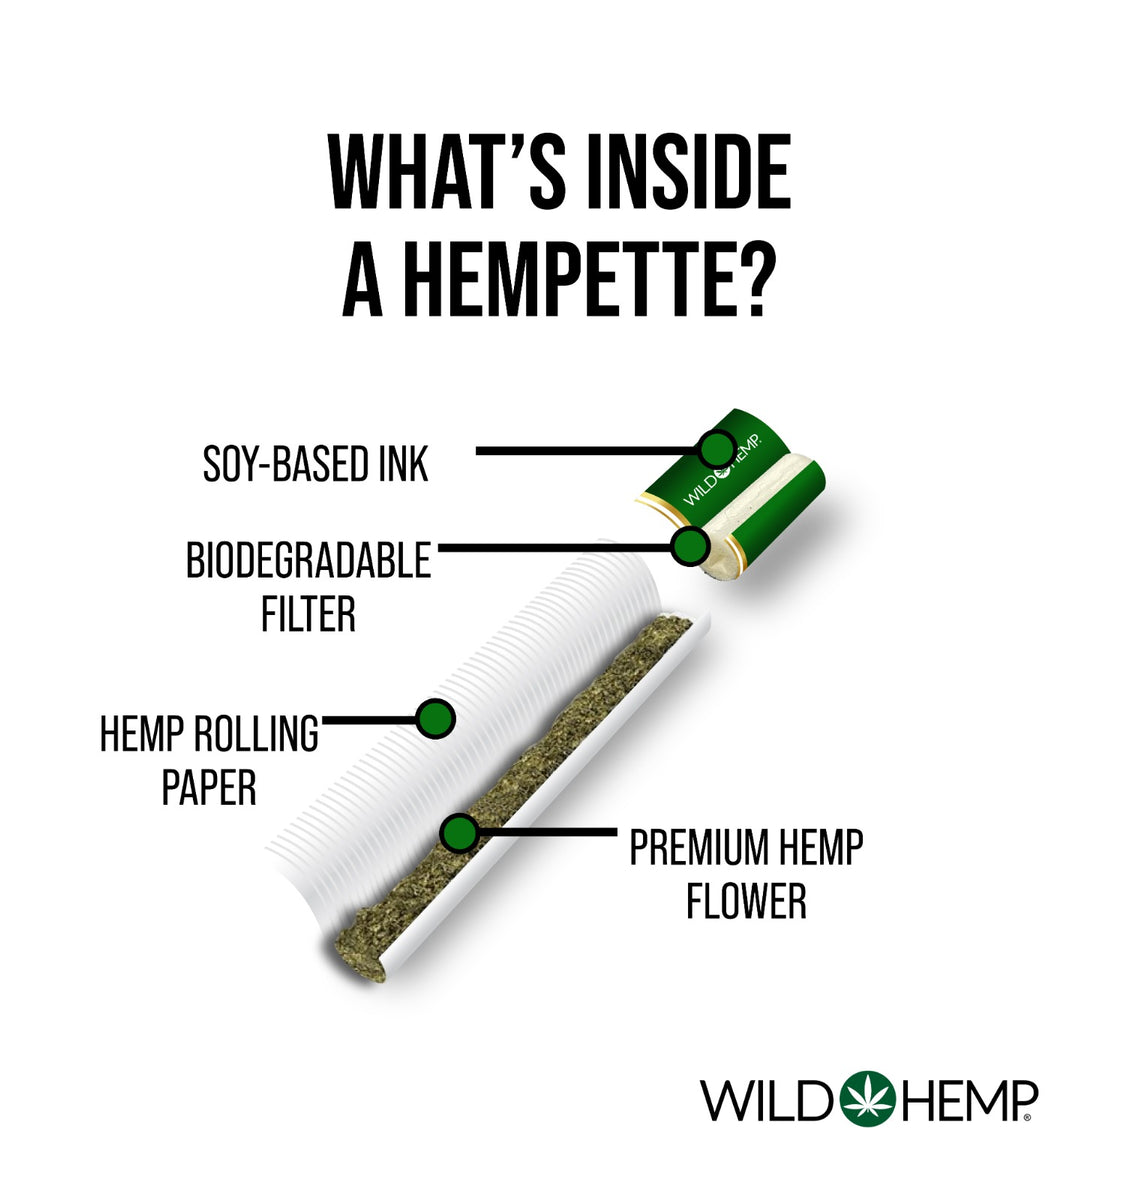 What is inside a Hempette (Wild Hemp's CBD cigarette)? 1. Biodegradable acetate filter with soy-based ink. 2. 100% hemp rolling paper. 3. Premium Hemp Flower.  